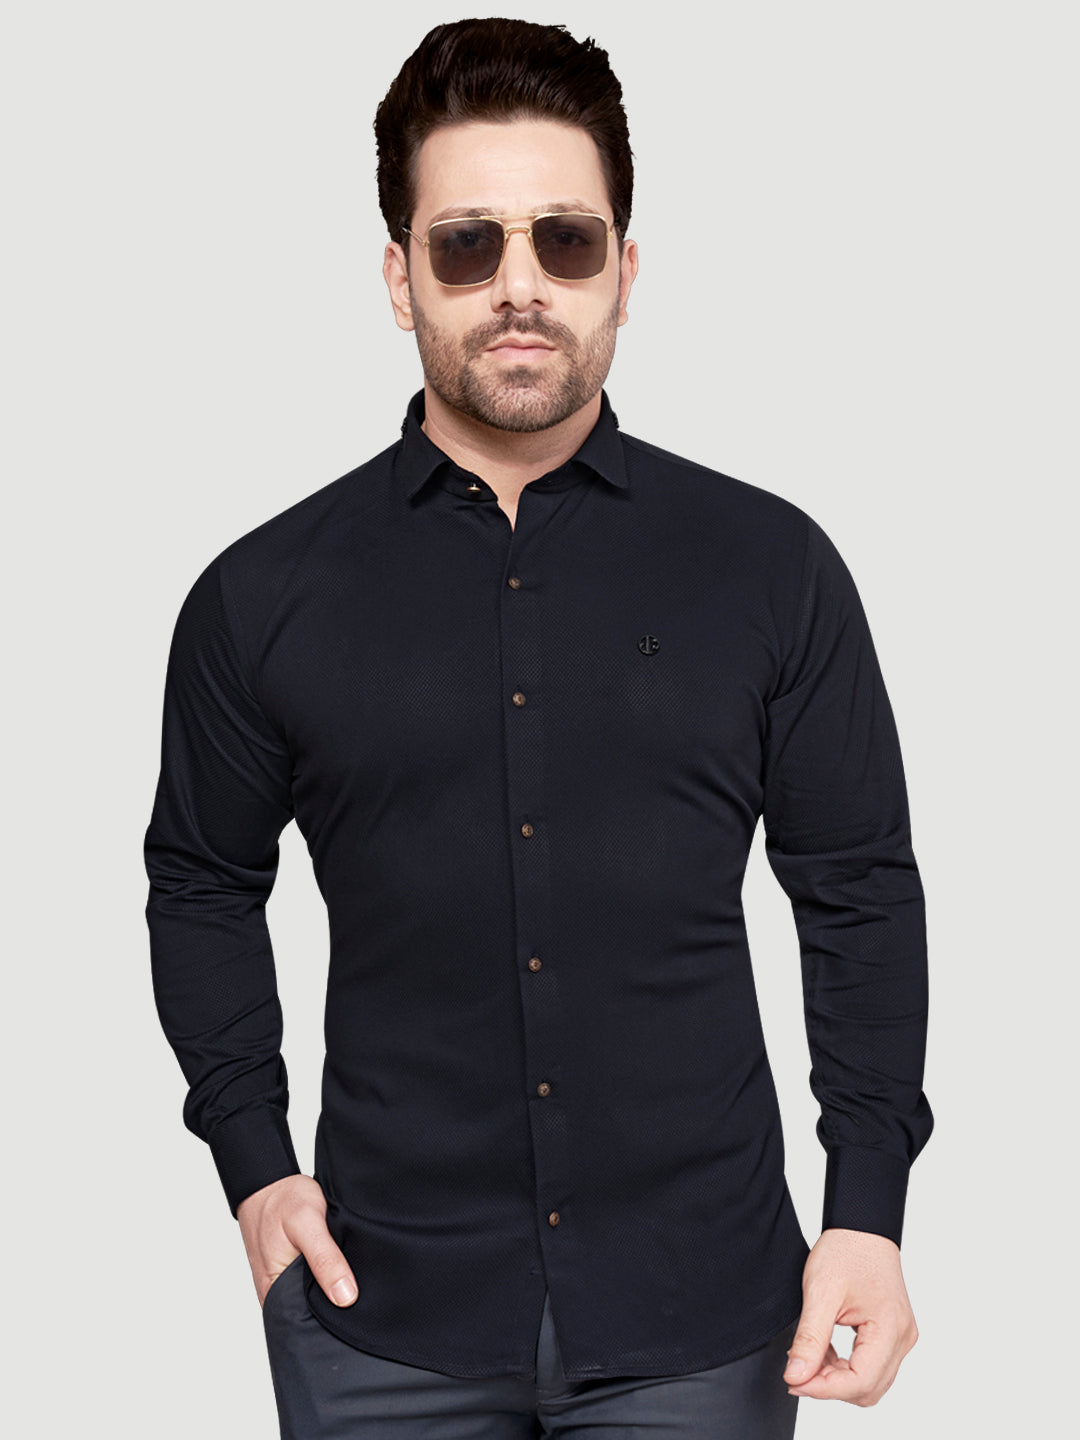 Black and White Men's Designer Shirt with Collar Accessory & Designer Broach Navy Blue